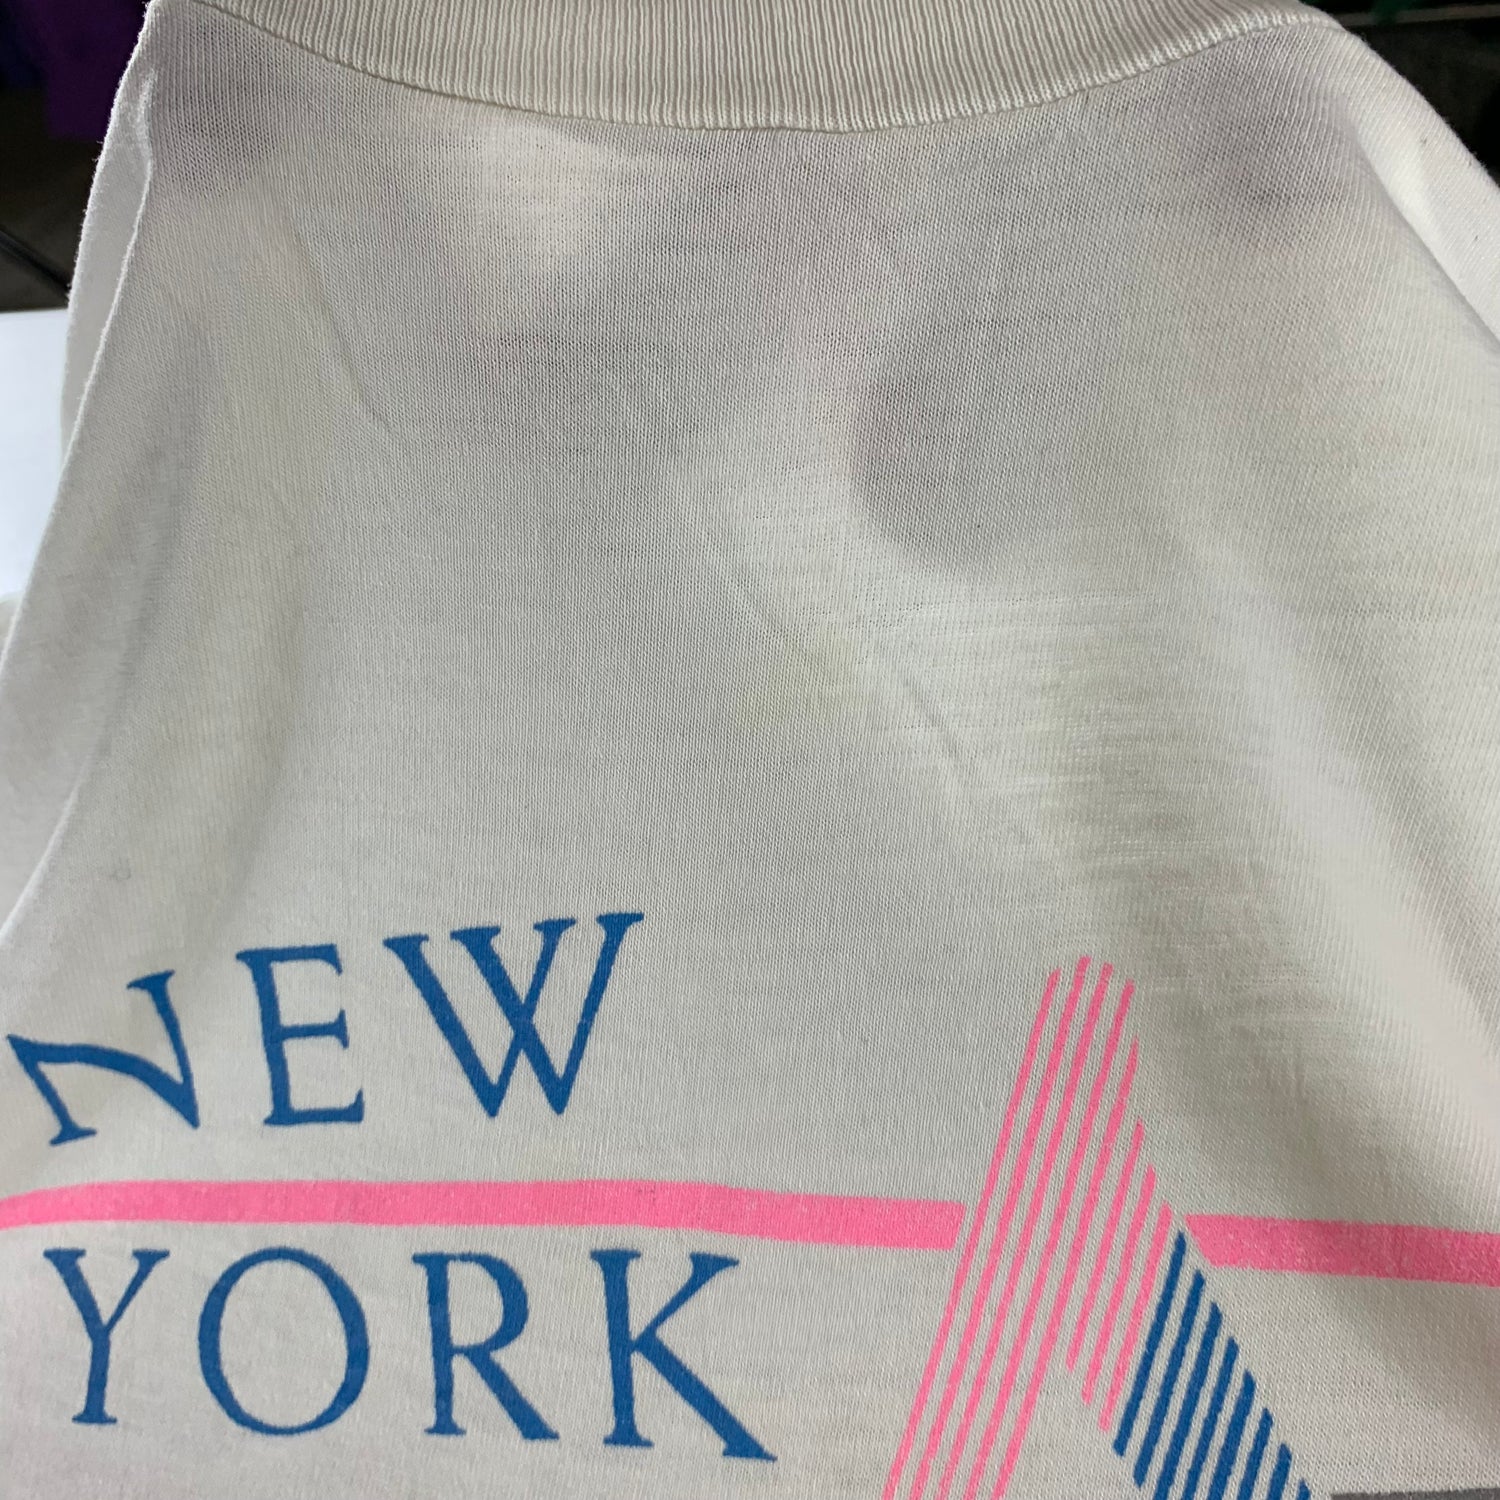 Vintage 1980s New York T-shirt size Large